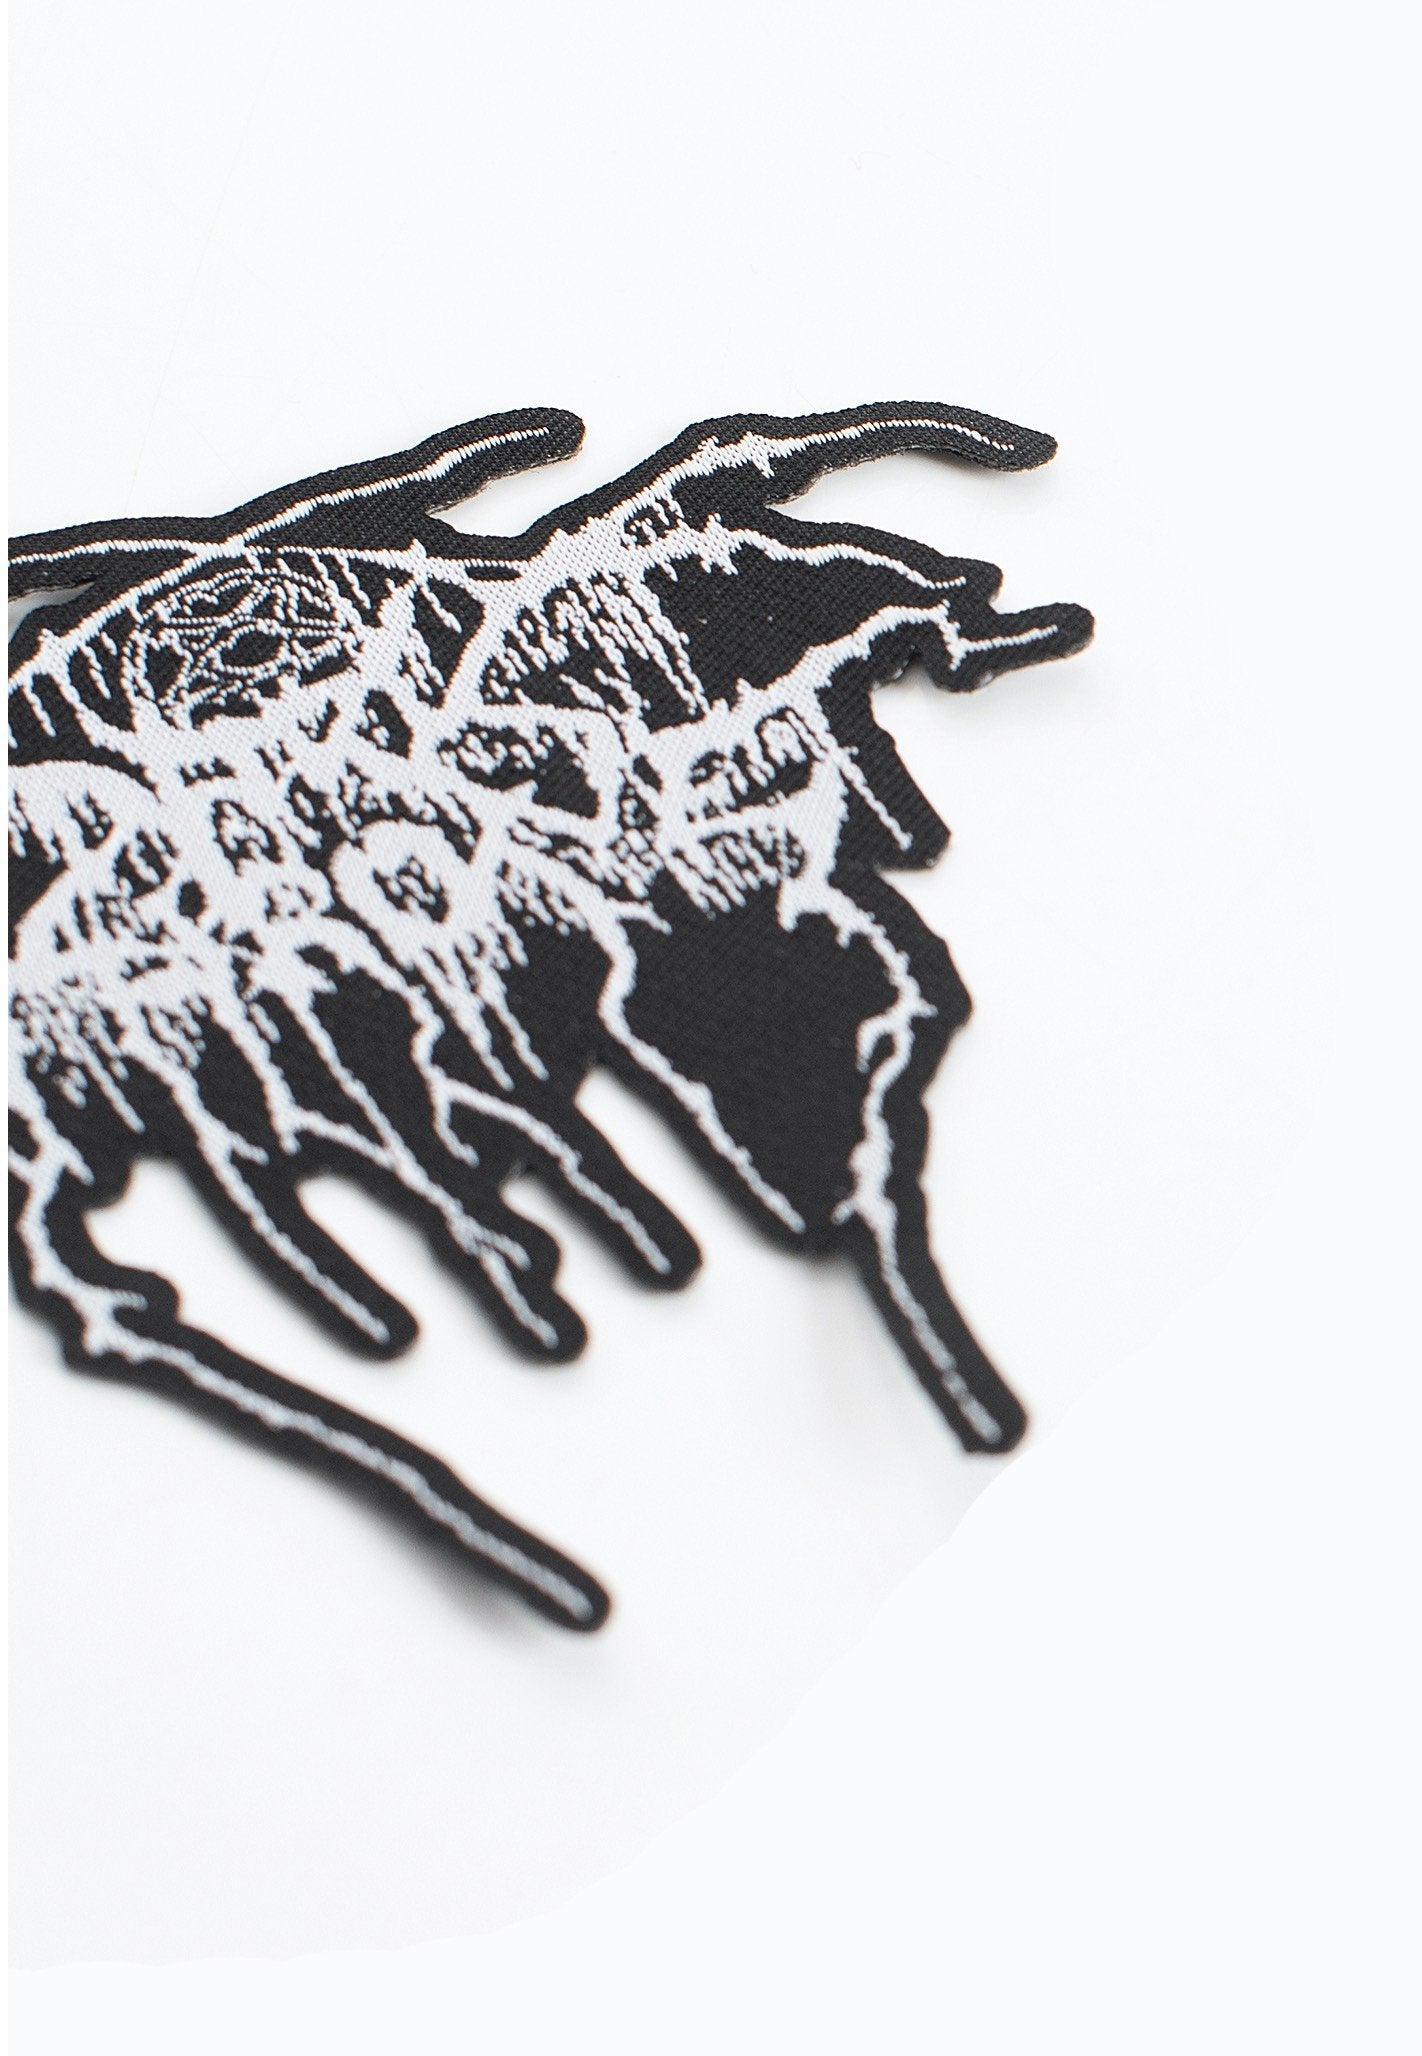 Darkthrone - Logo Cut Out - Patch